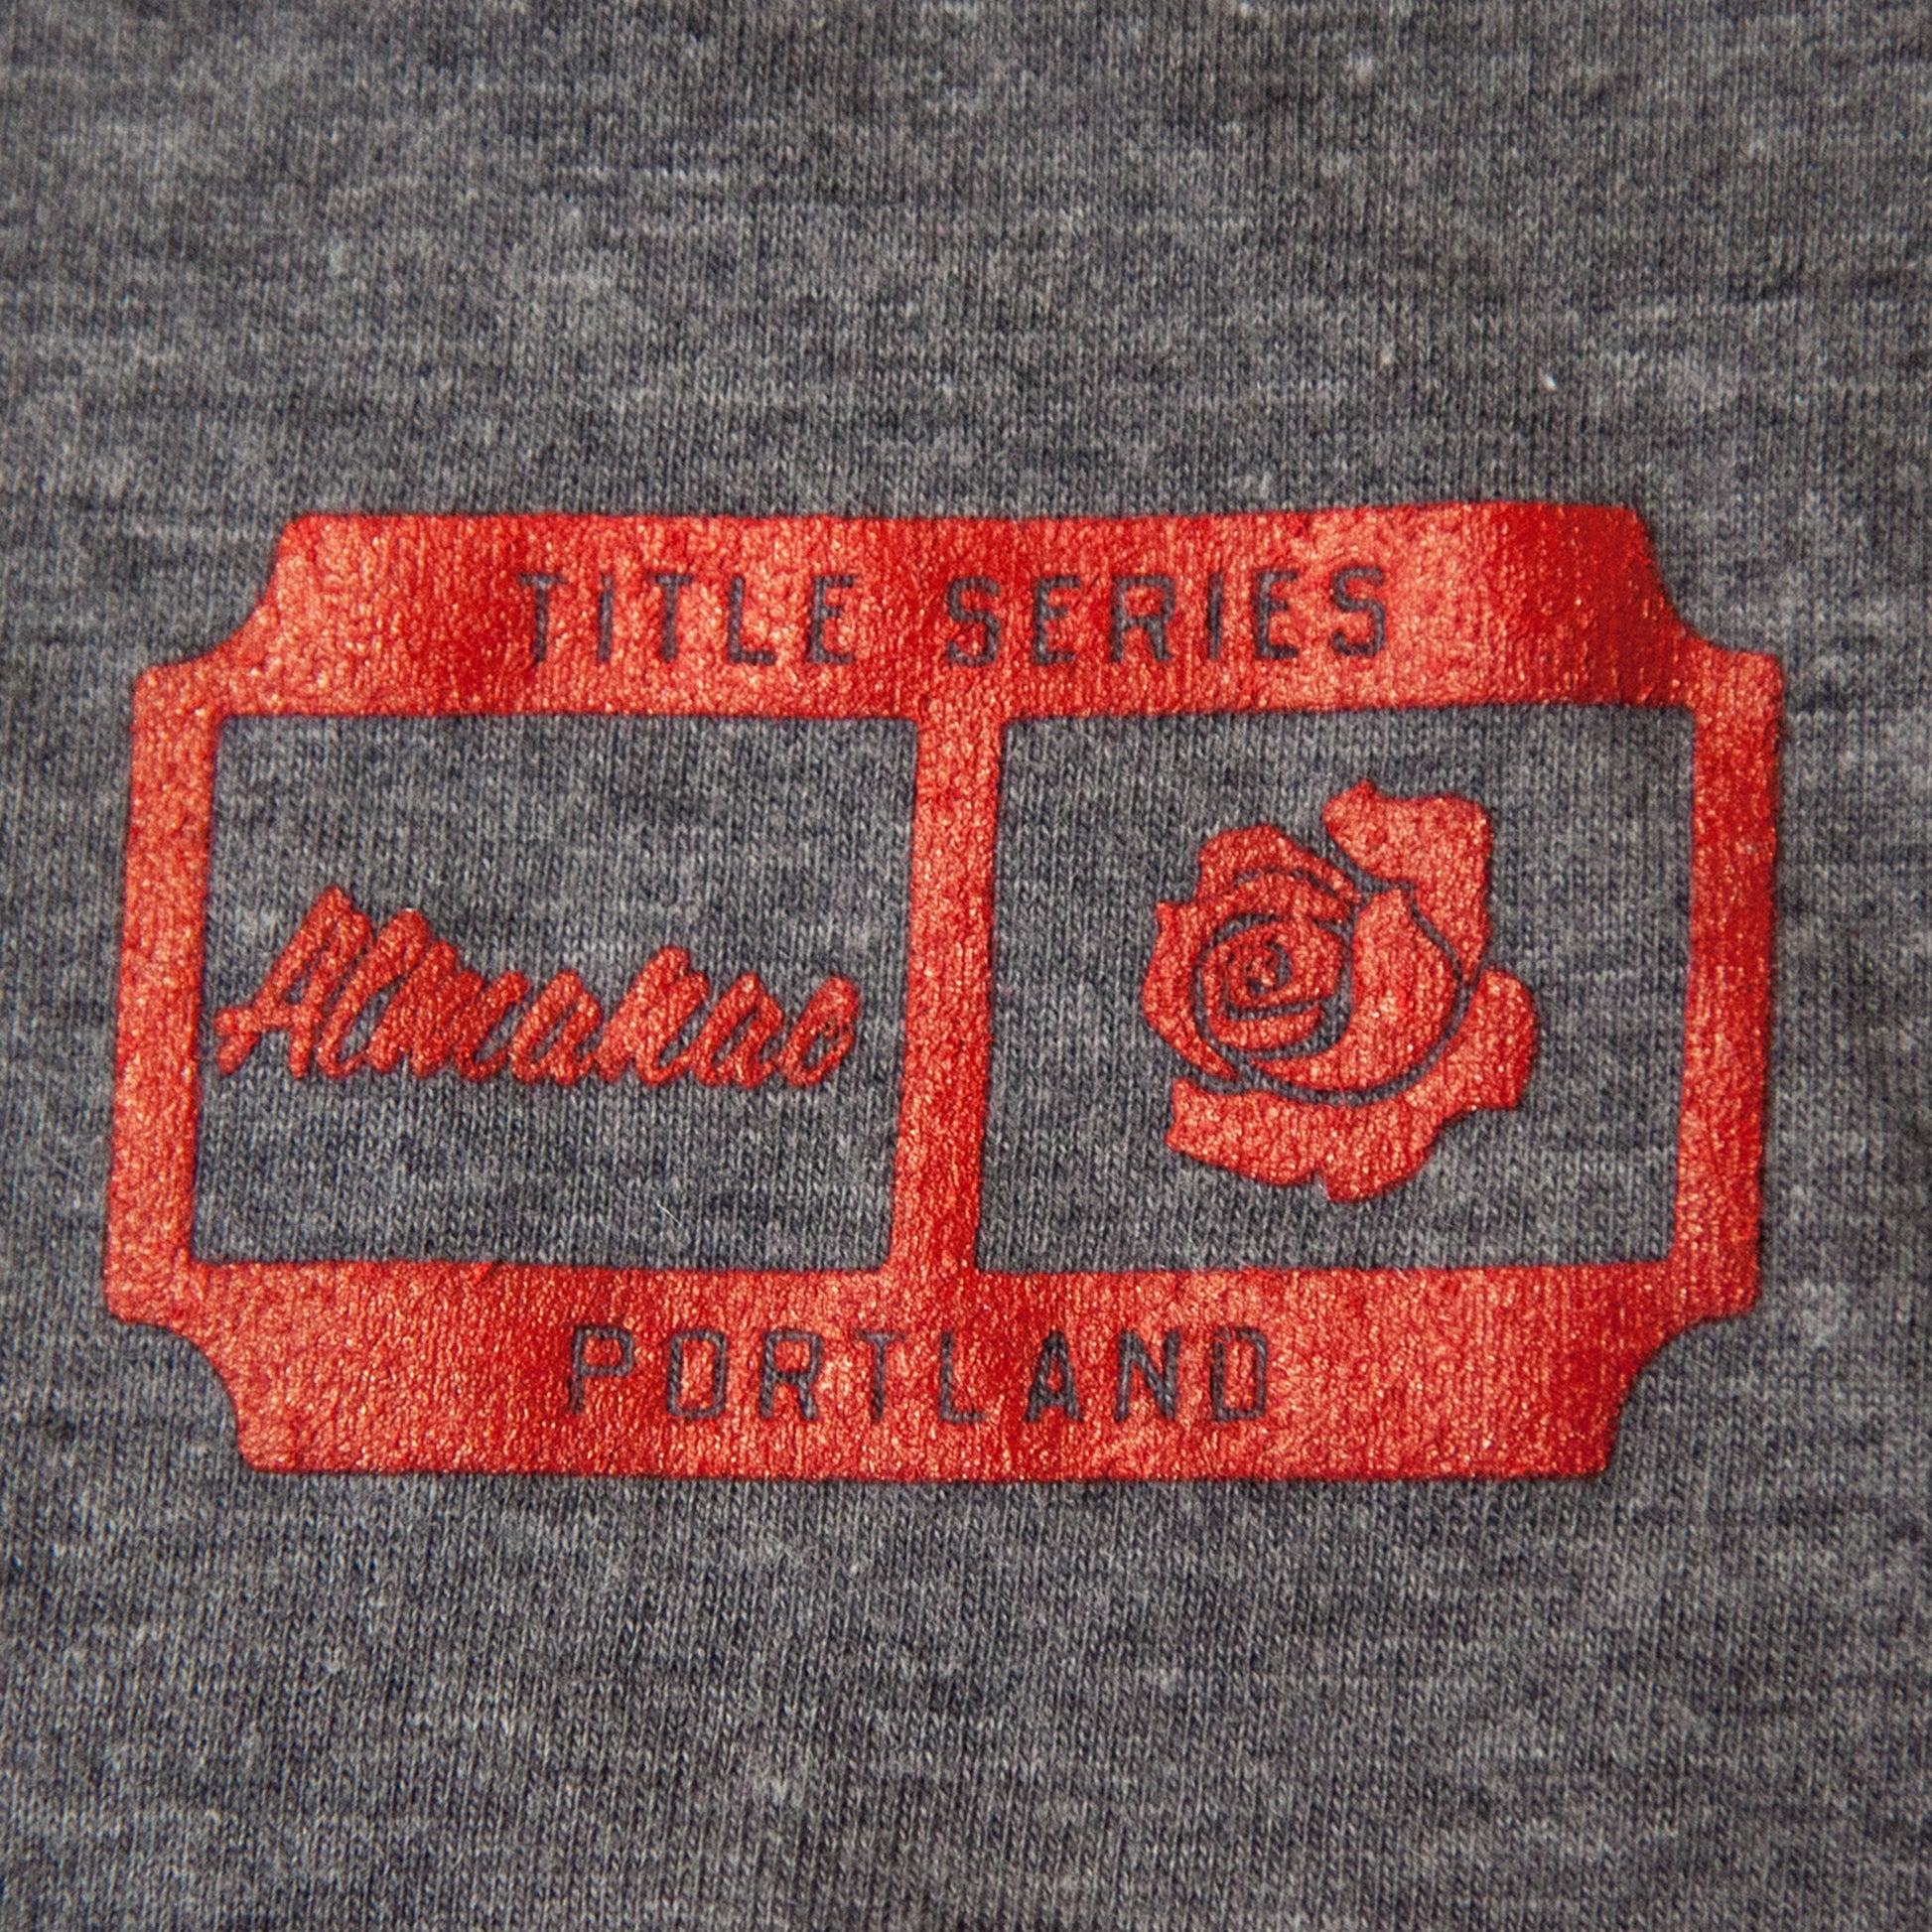 Almanac Red/Grey 1977 Portland Baseball Shirt